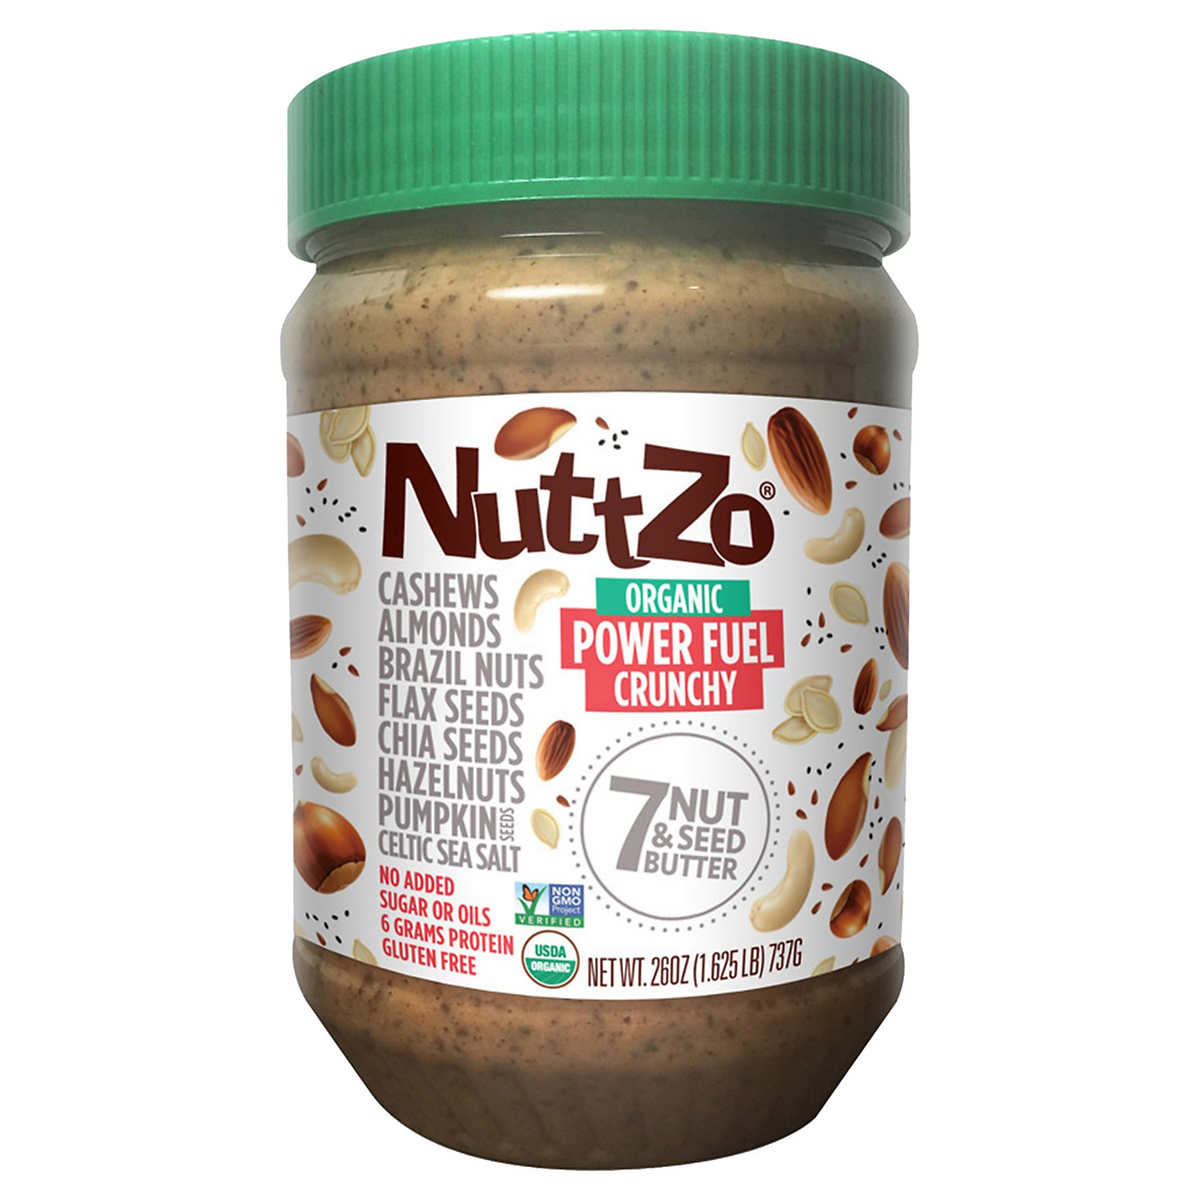 Nuttzo Organic 7 Nut & Seed Butter, Power Fuel Crunchy, 26 Oz.